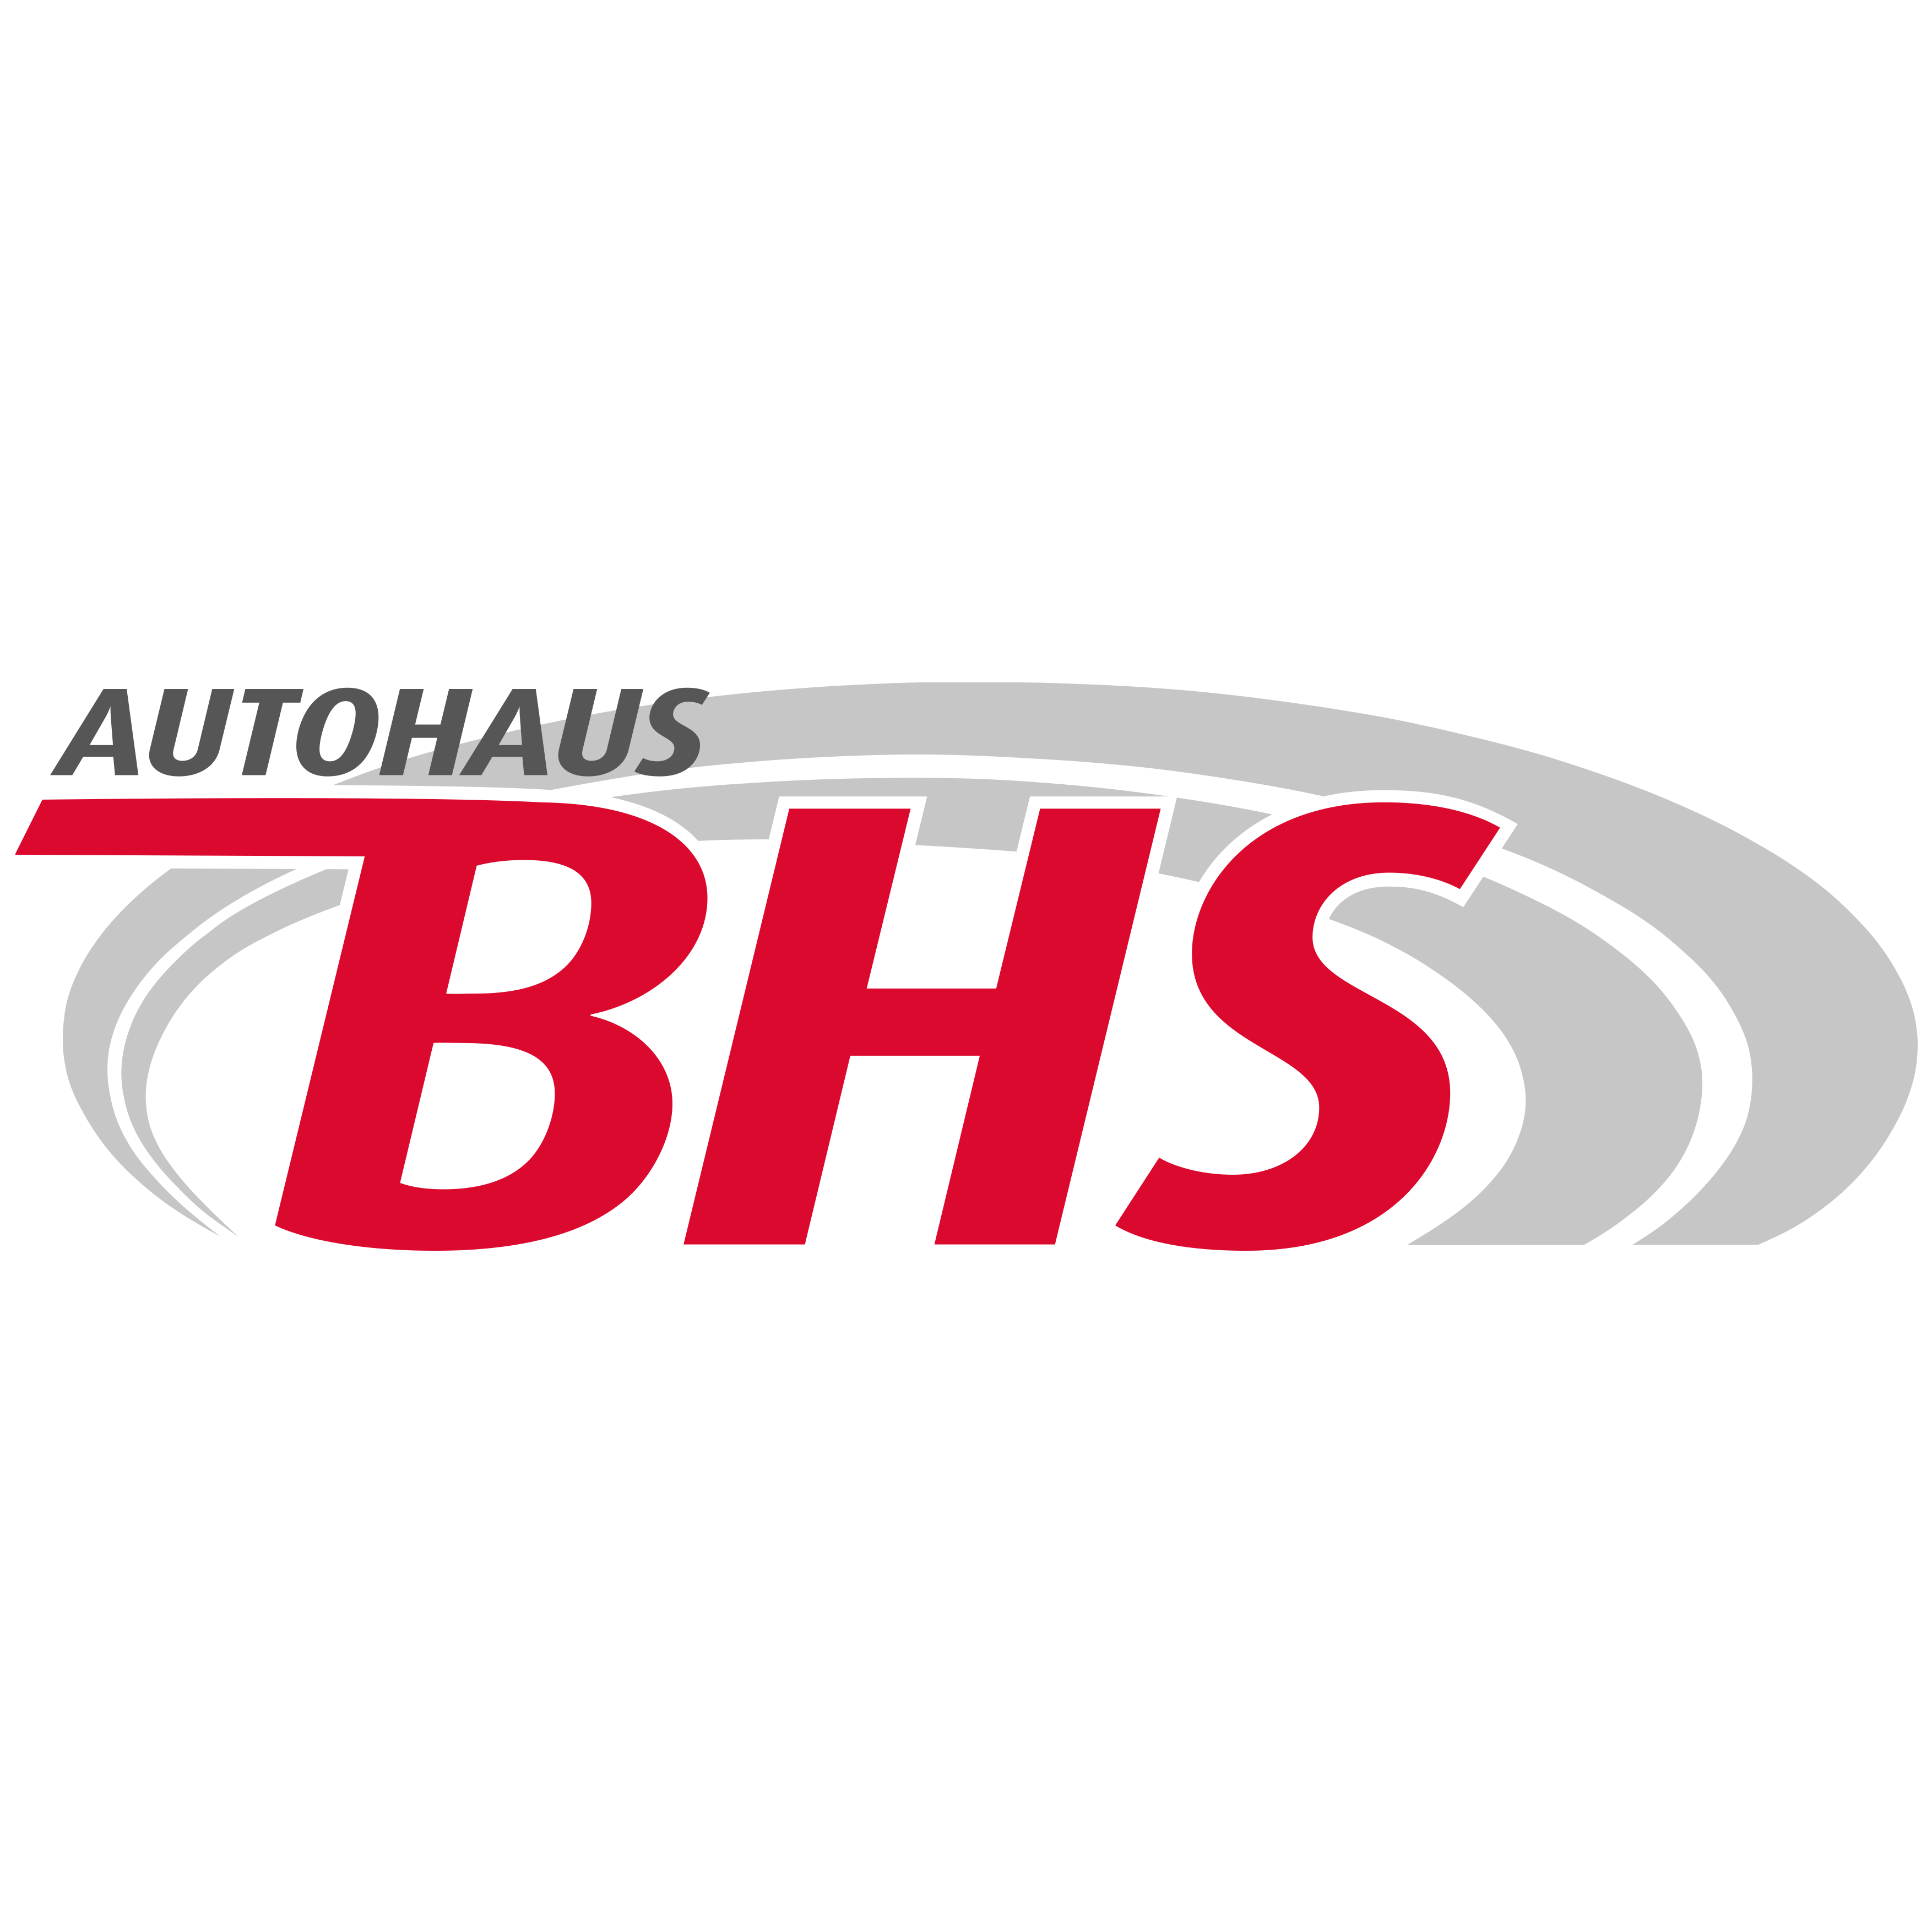 BHS Handels- u. Betriebs GmbH in Zwickau